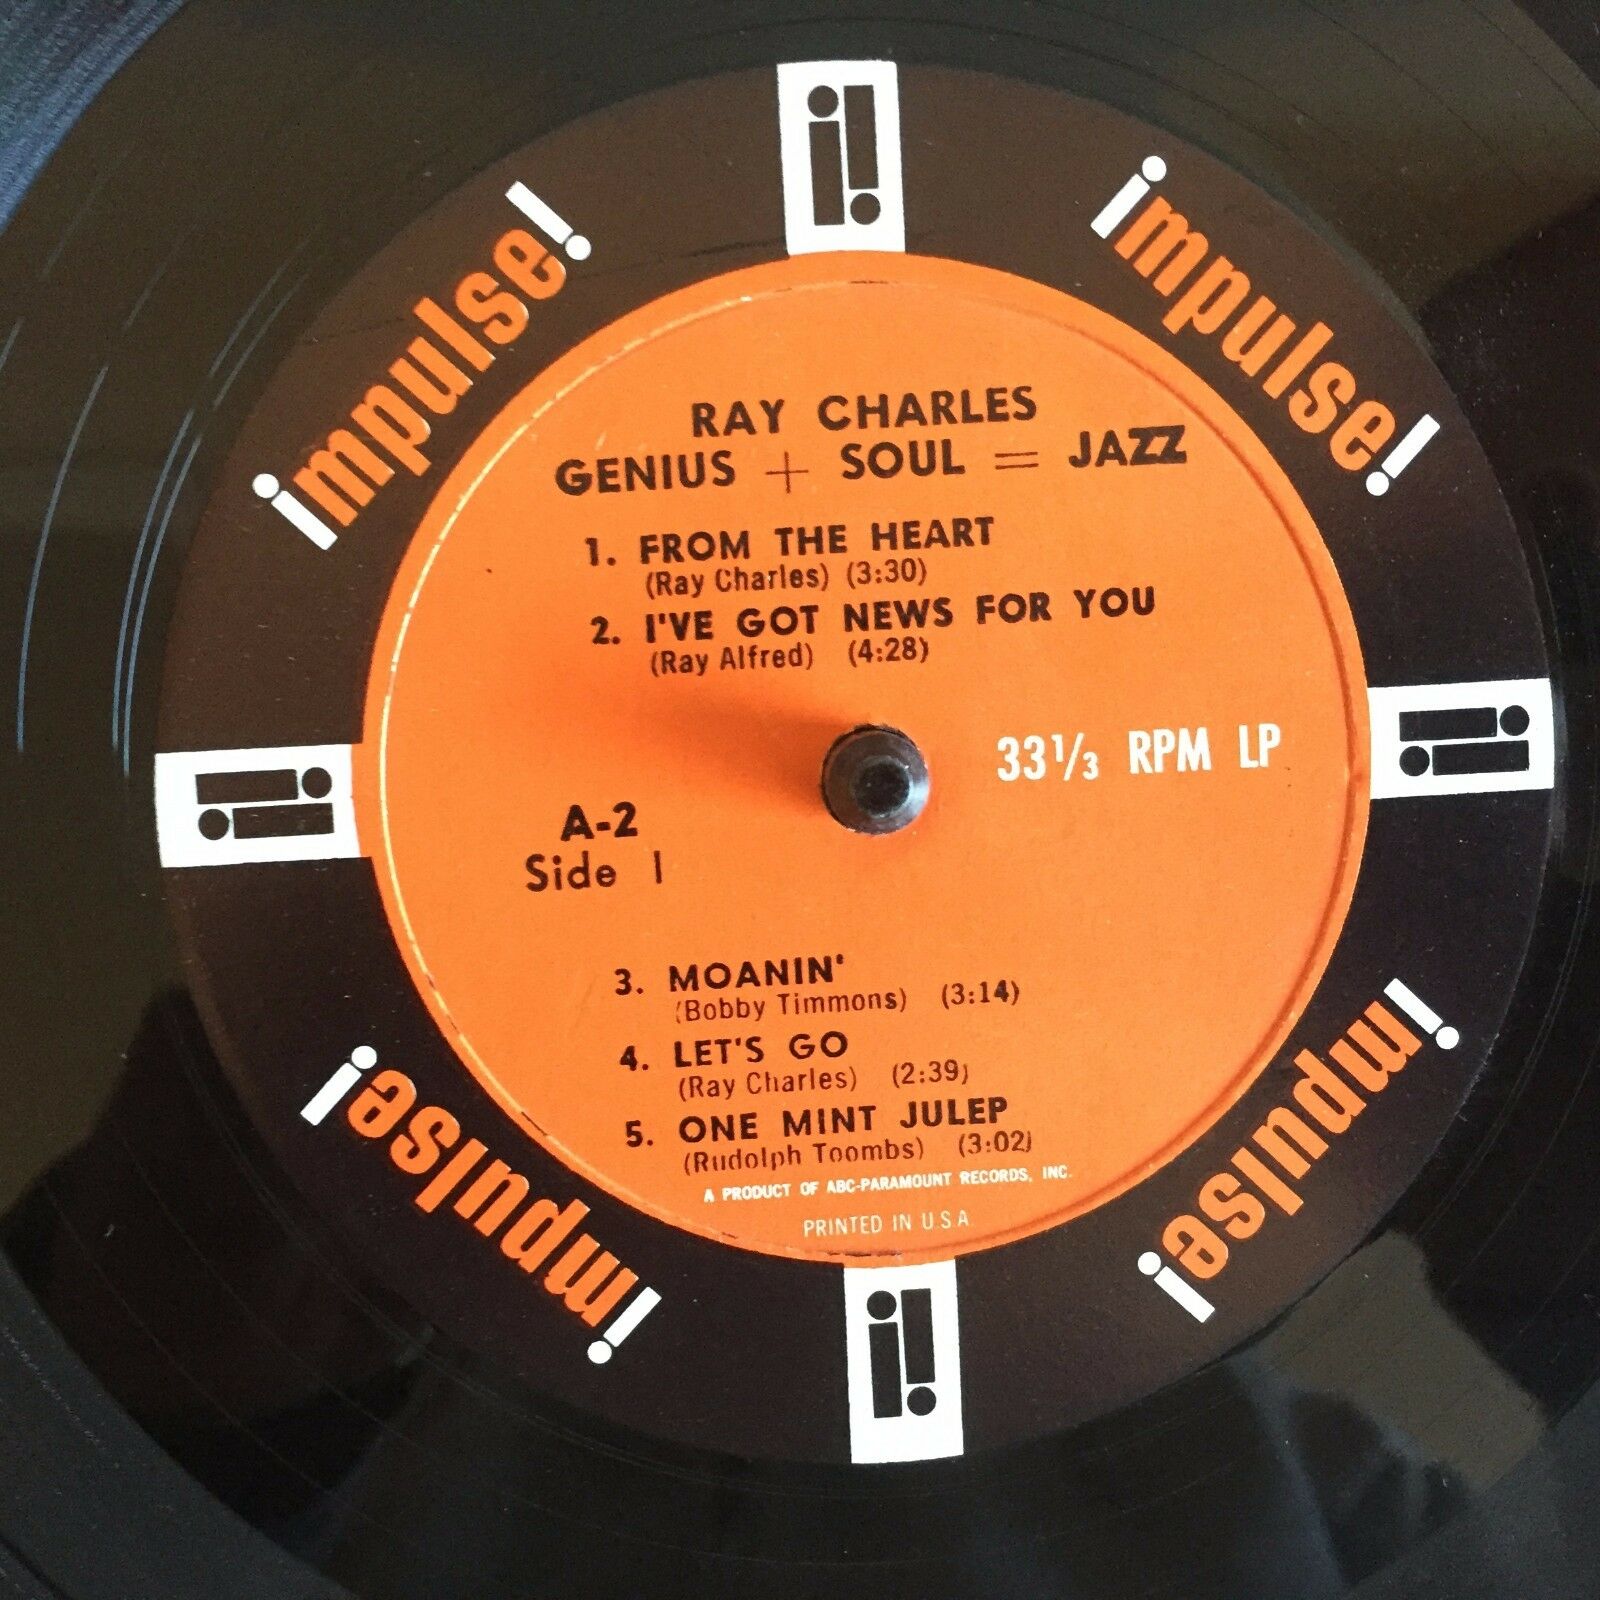 Pic 1 Genius+Soul=Jazz by Ray Charles 1961 Vinyl Impulse Records 1st Press Mono